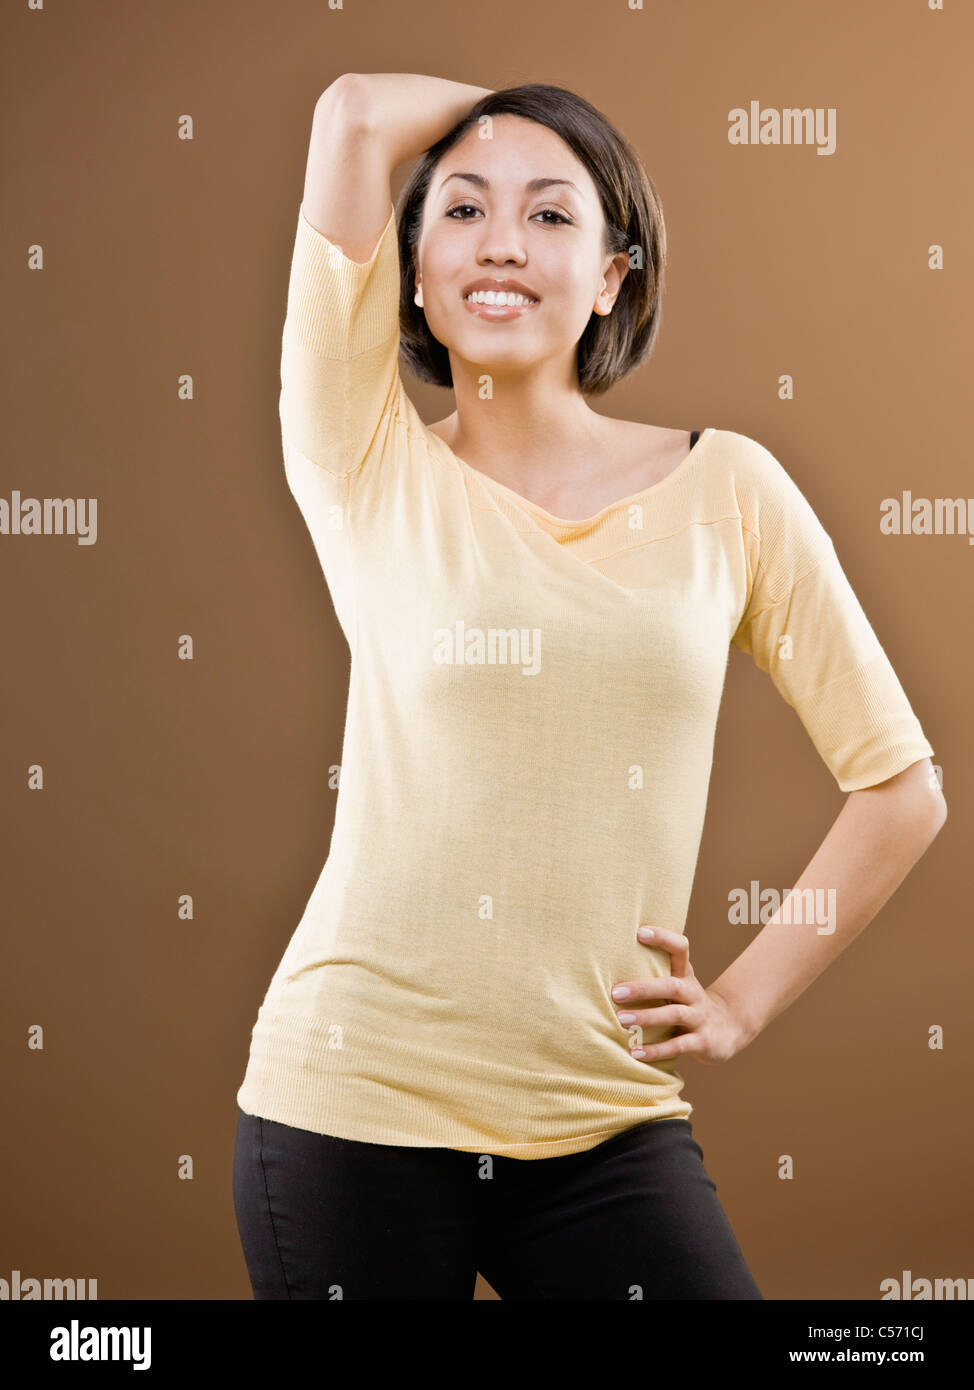 Girl Posed Hand Behind Head Stock Photo 1128582011 | Shutterstock